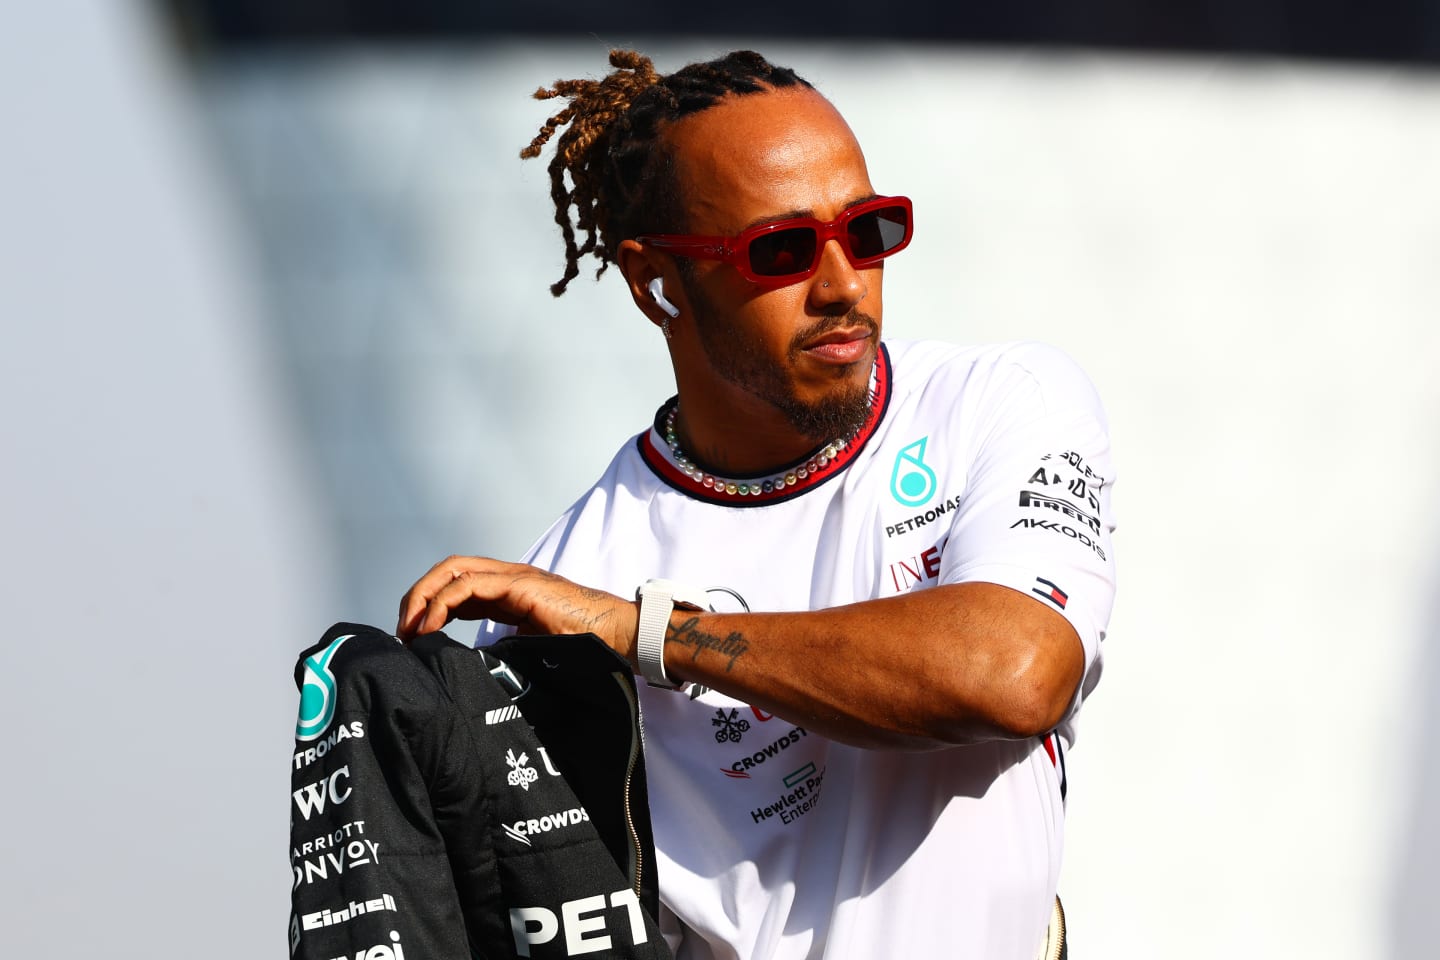 ABU DHABI, UNITED ARAB EMIRATES - NOVEMBER 26: Lewis Hamilton of Great Britain and Mercedes looks